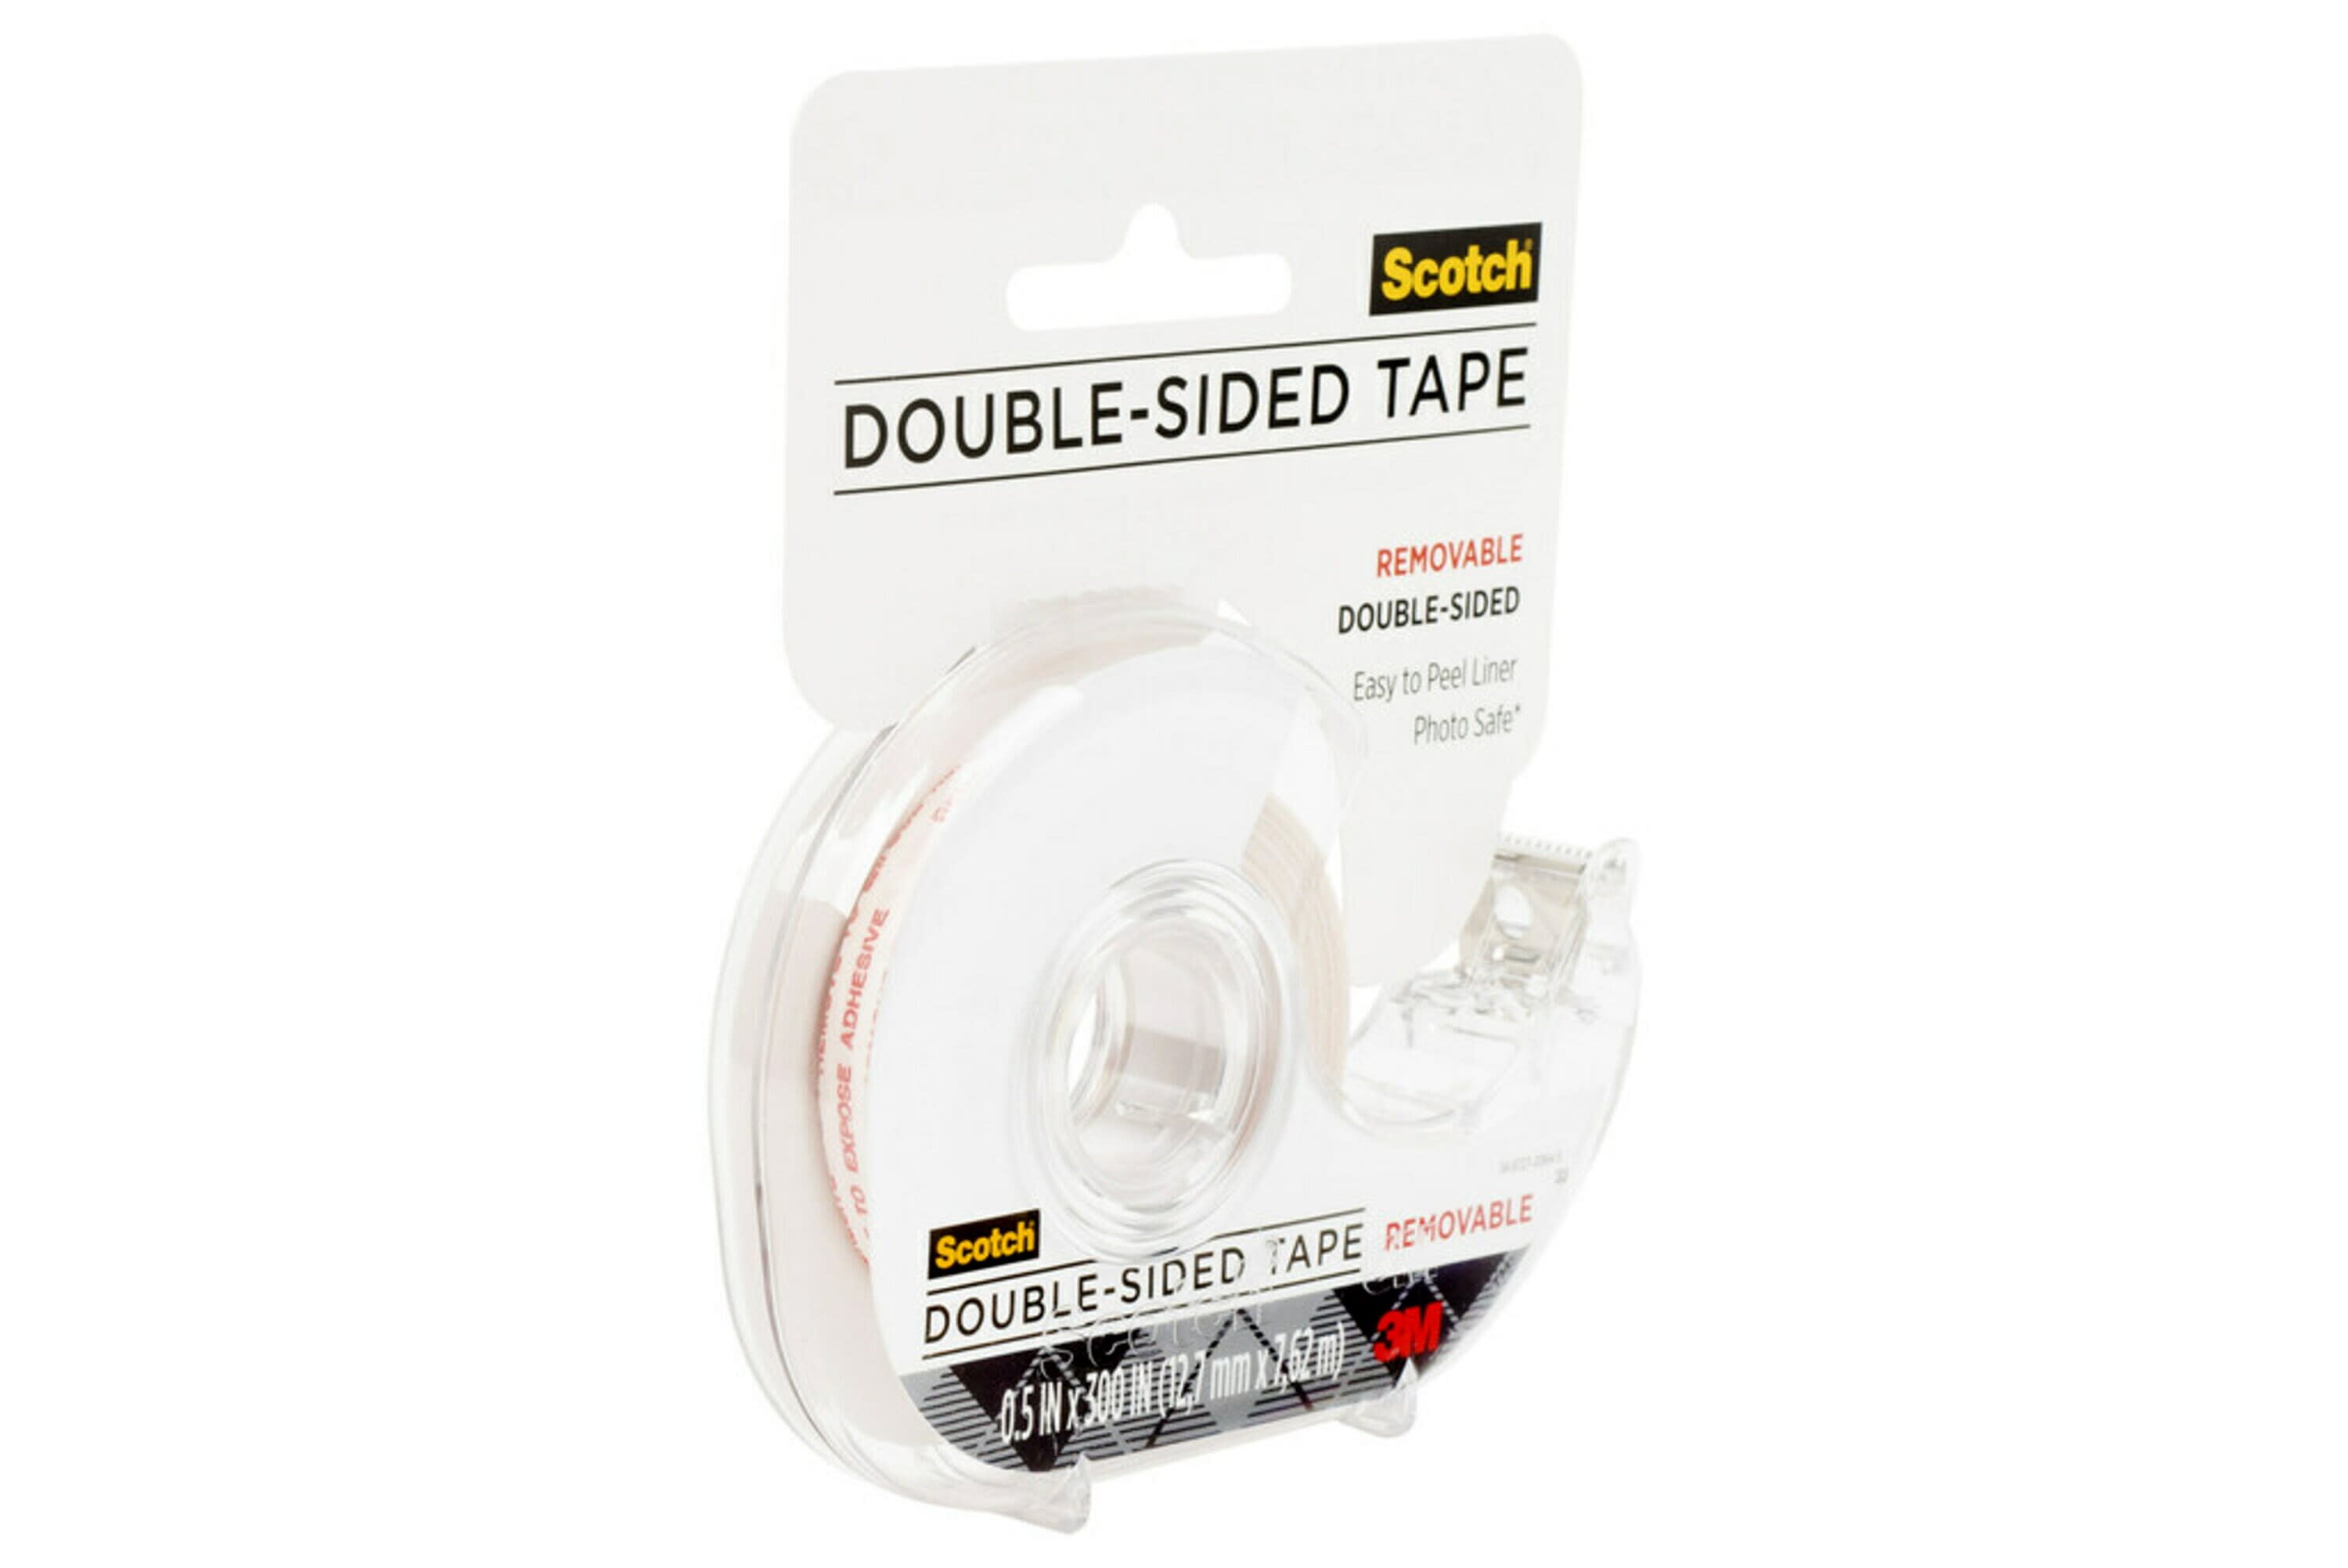 Scotch Double-Sided Photo-Safe Tape - Zerbee